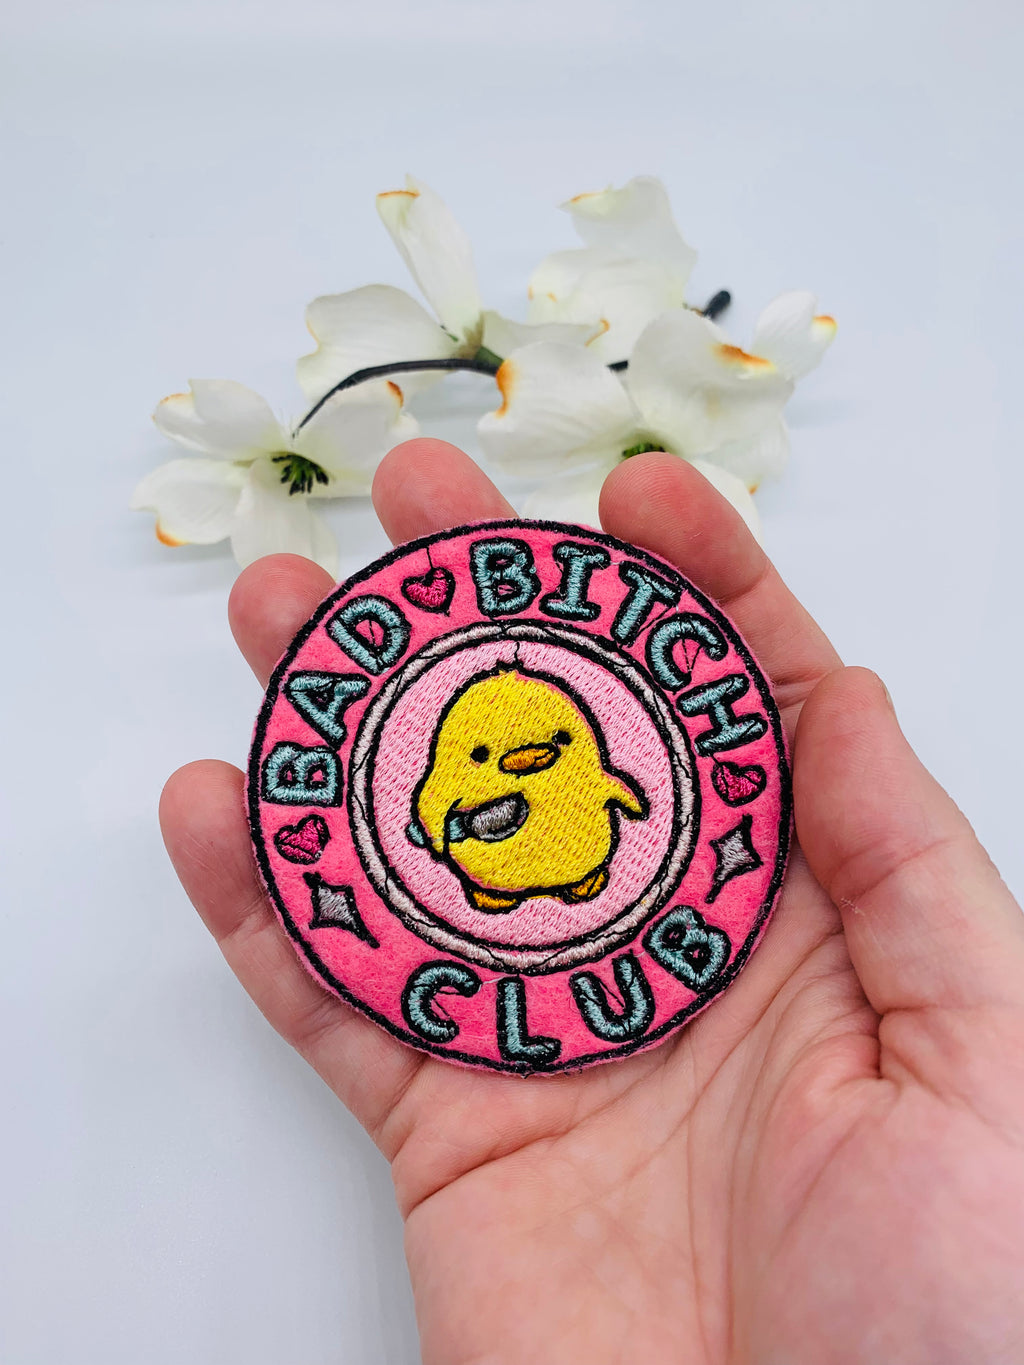 Bad bitch club Patch